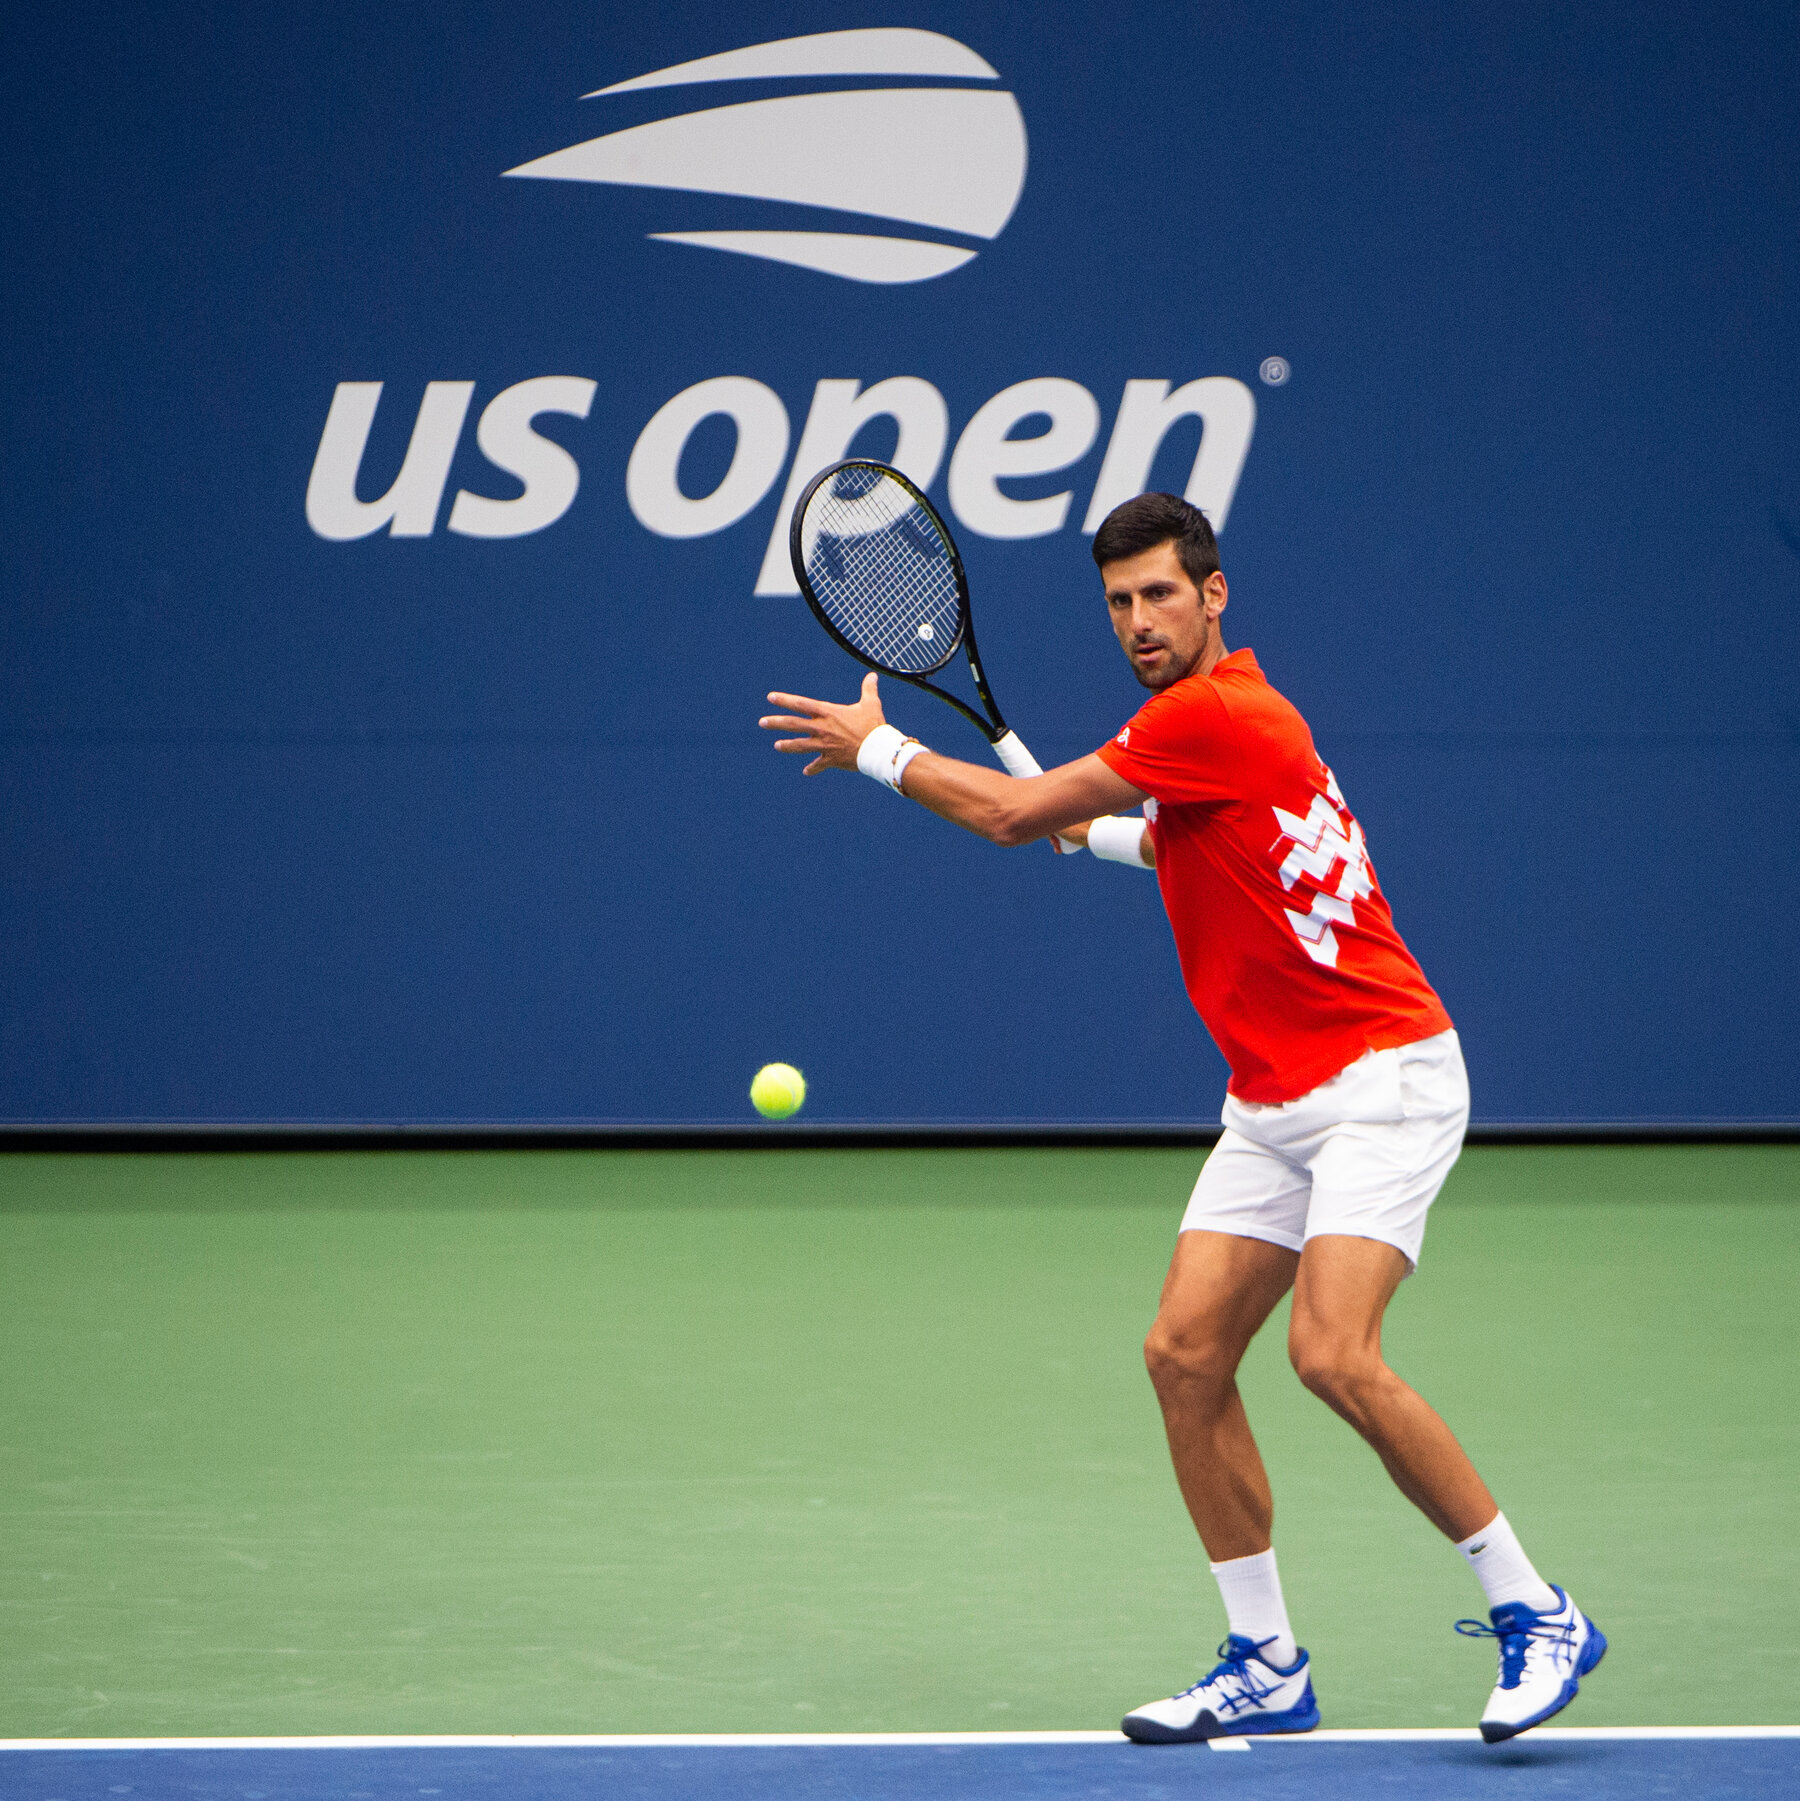 US Open 2021: Djokovic wins his 1st round match against Rune